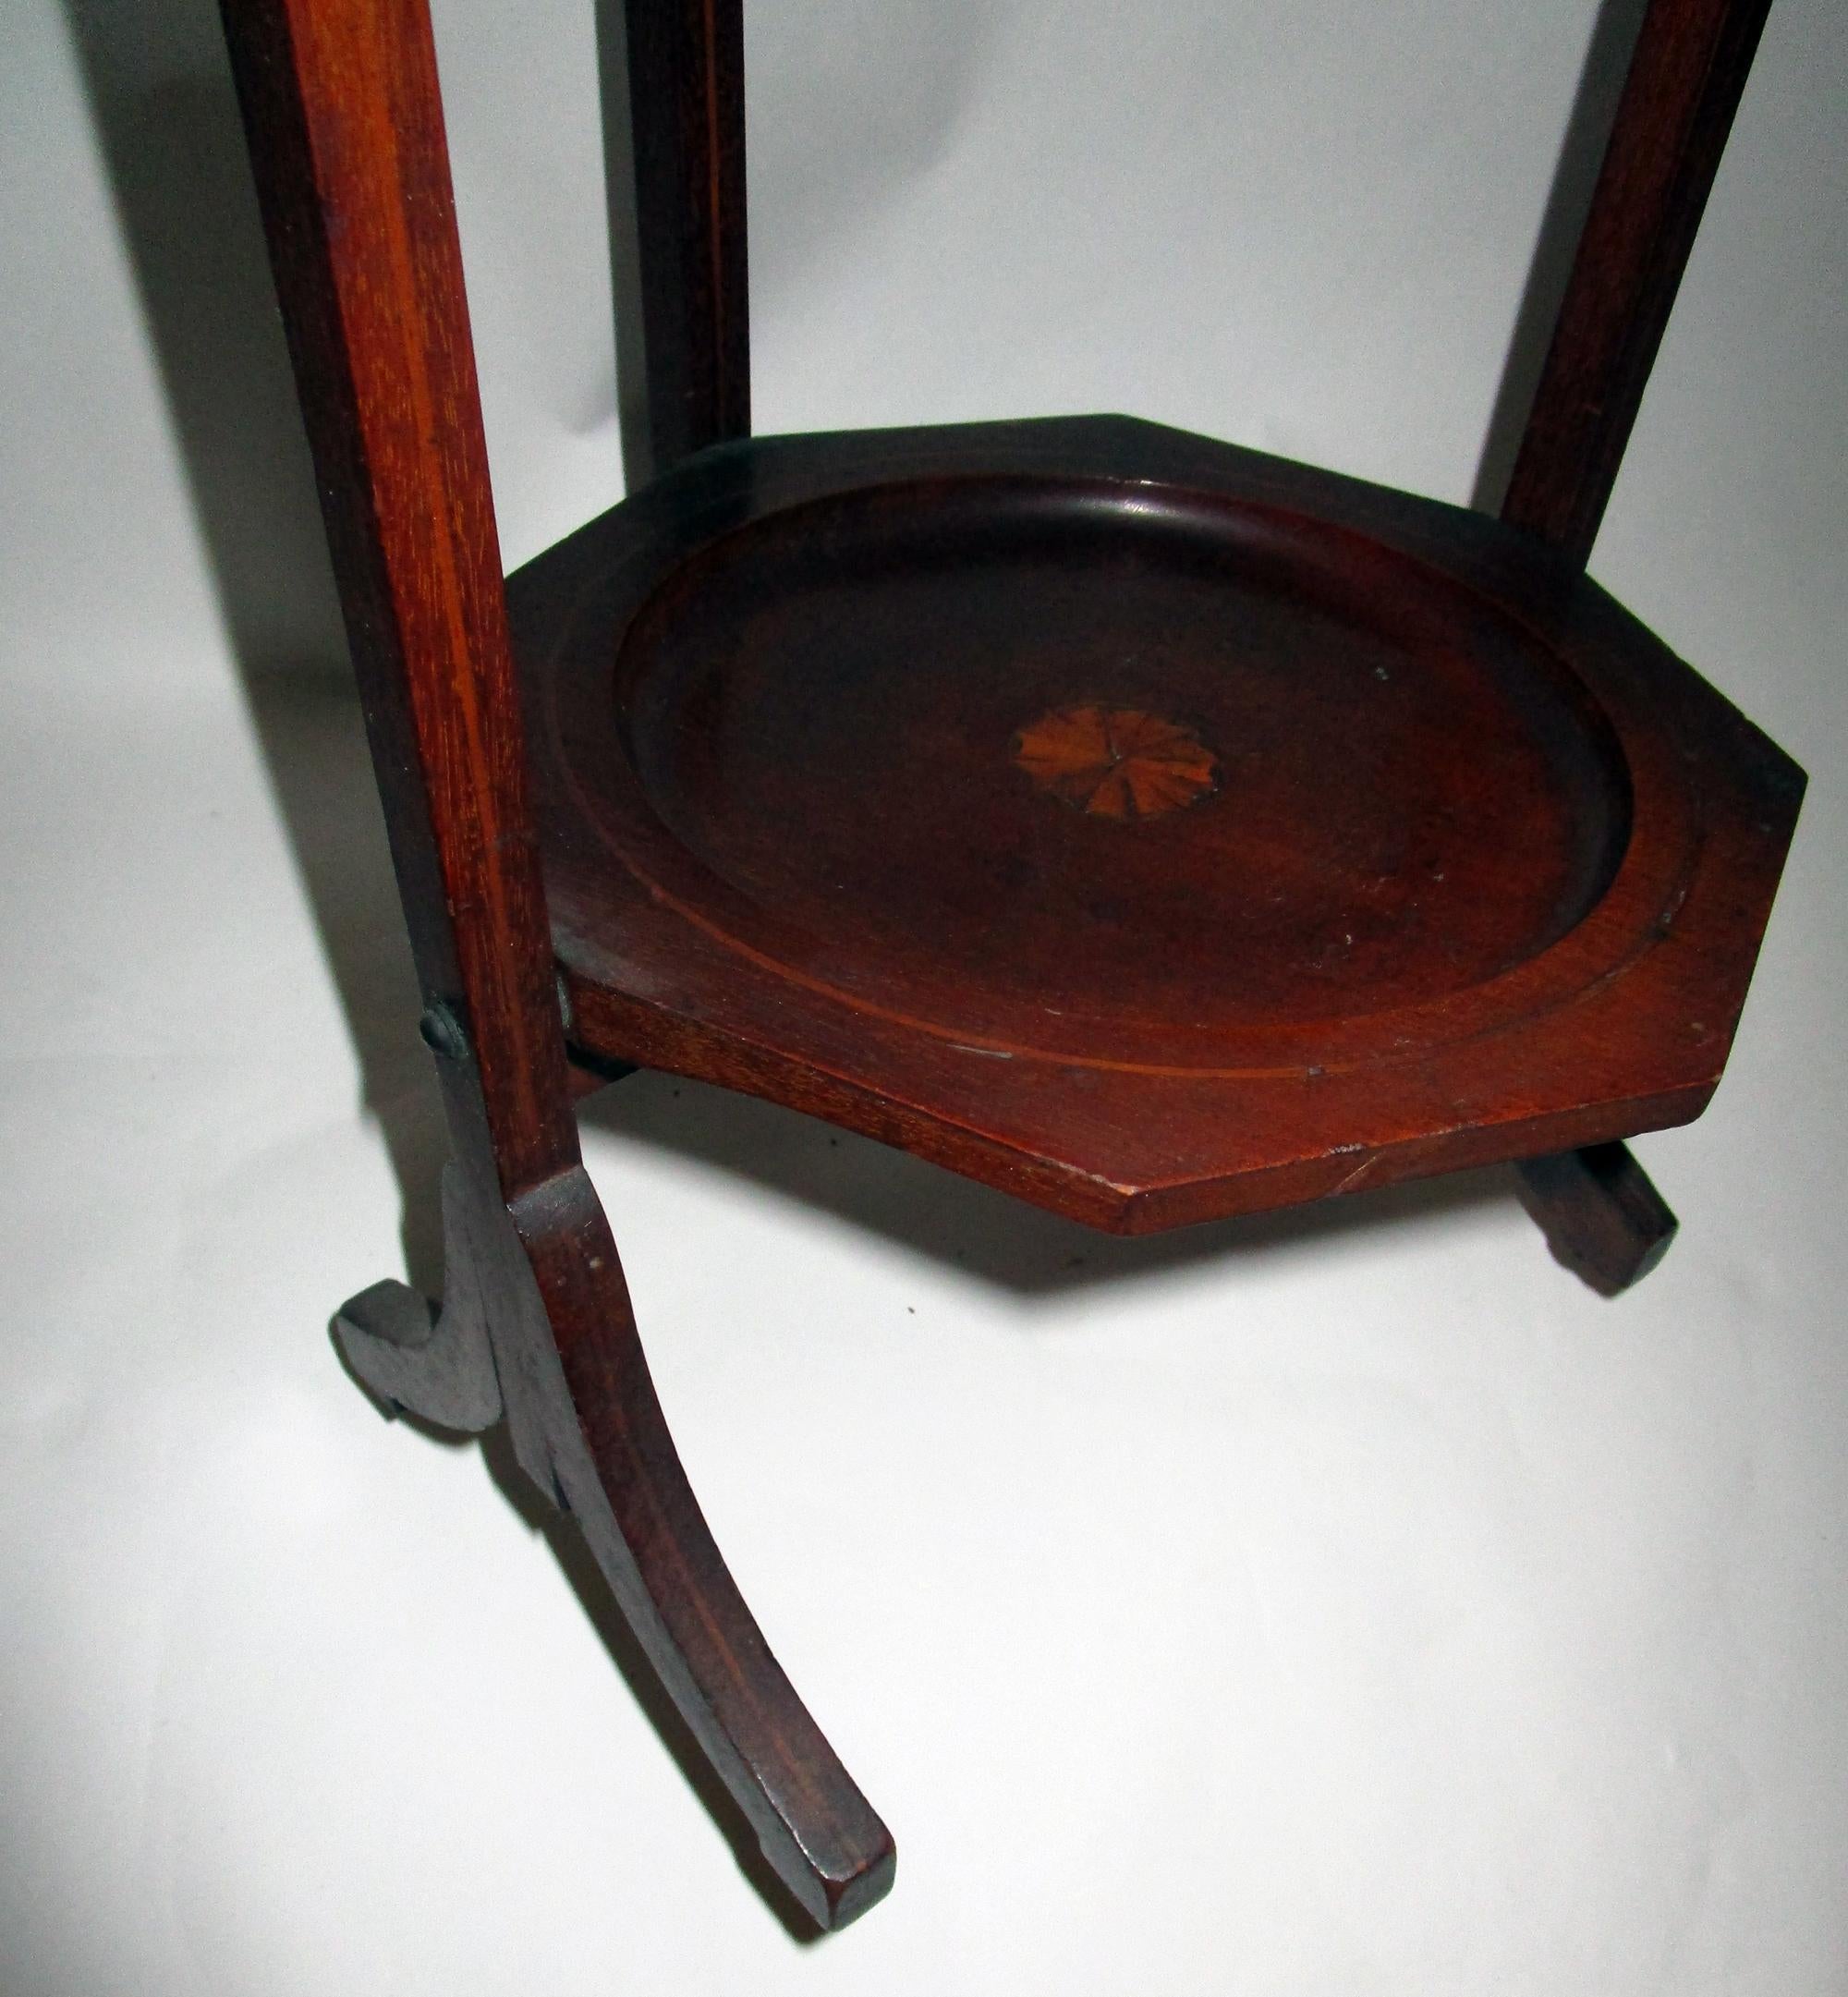 19th century Regency Mahogany Side Table or Muffin Stand (Spätes 19. Jahrhundert)